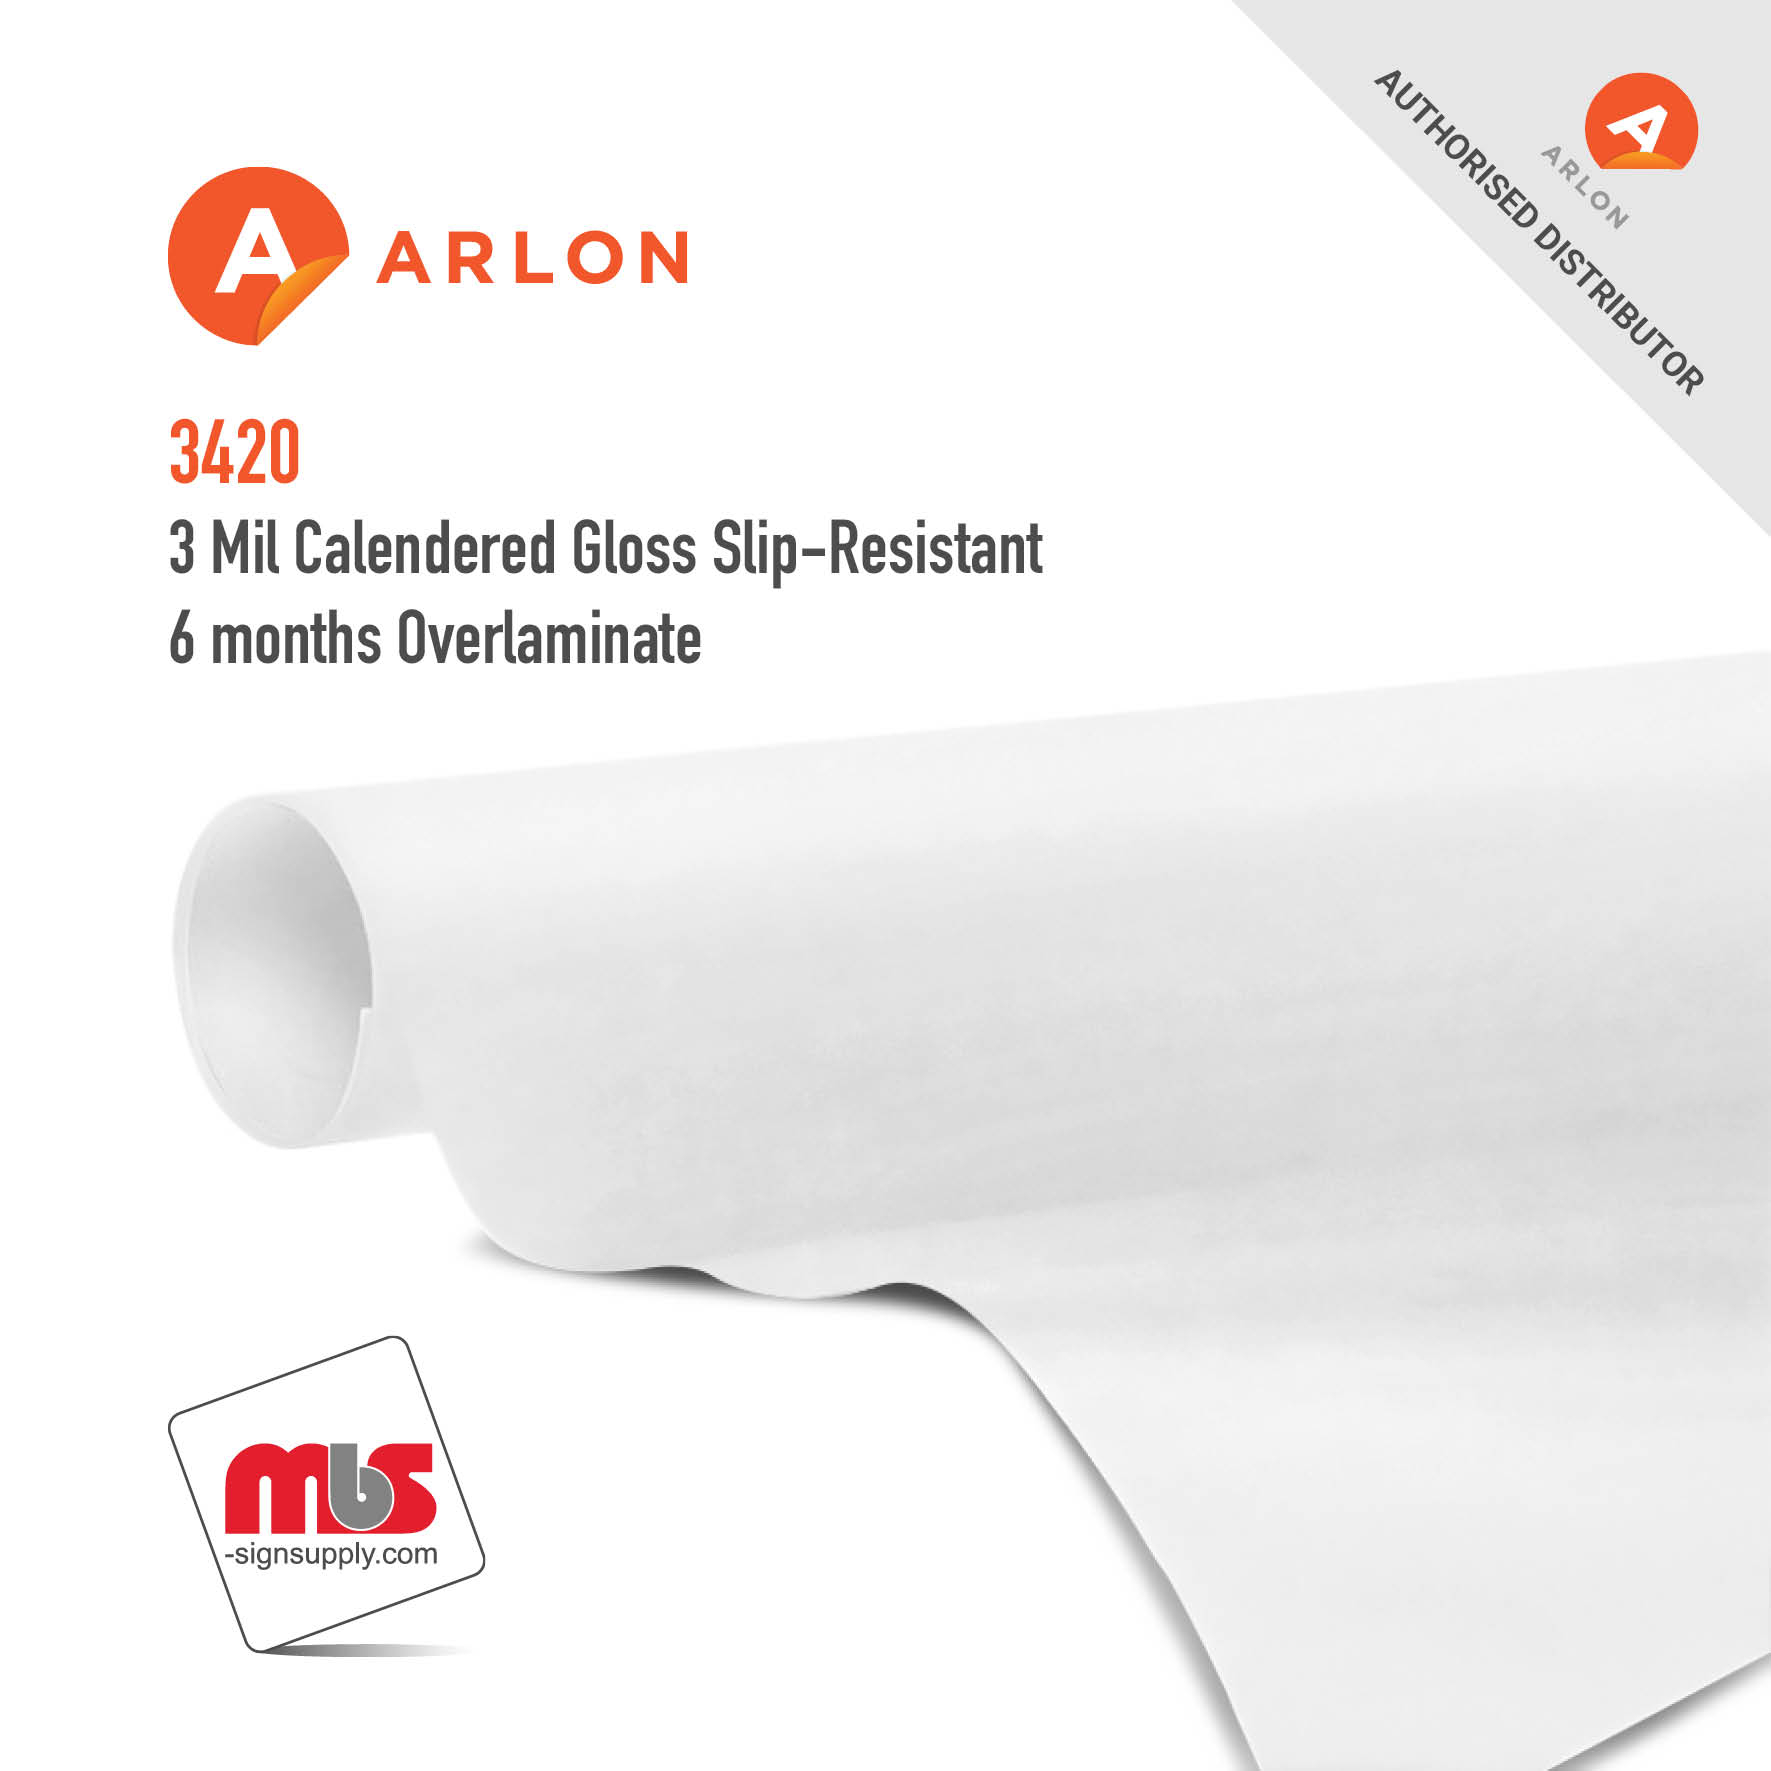 30'' x 50 Yard Roll - Arlon 3420 3 Mil Calendered Gloss Slip-Resistant 6 months Overlaminate